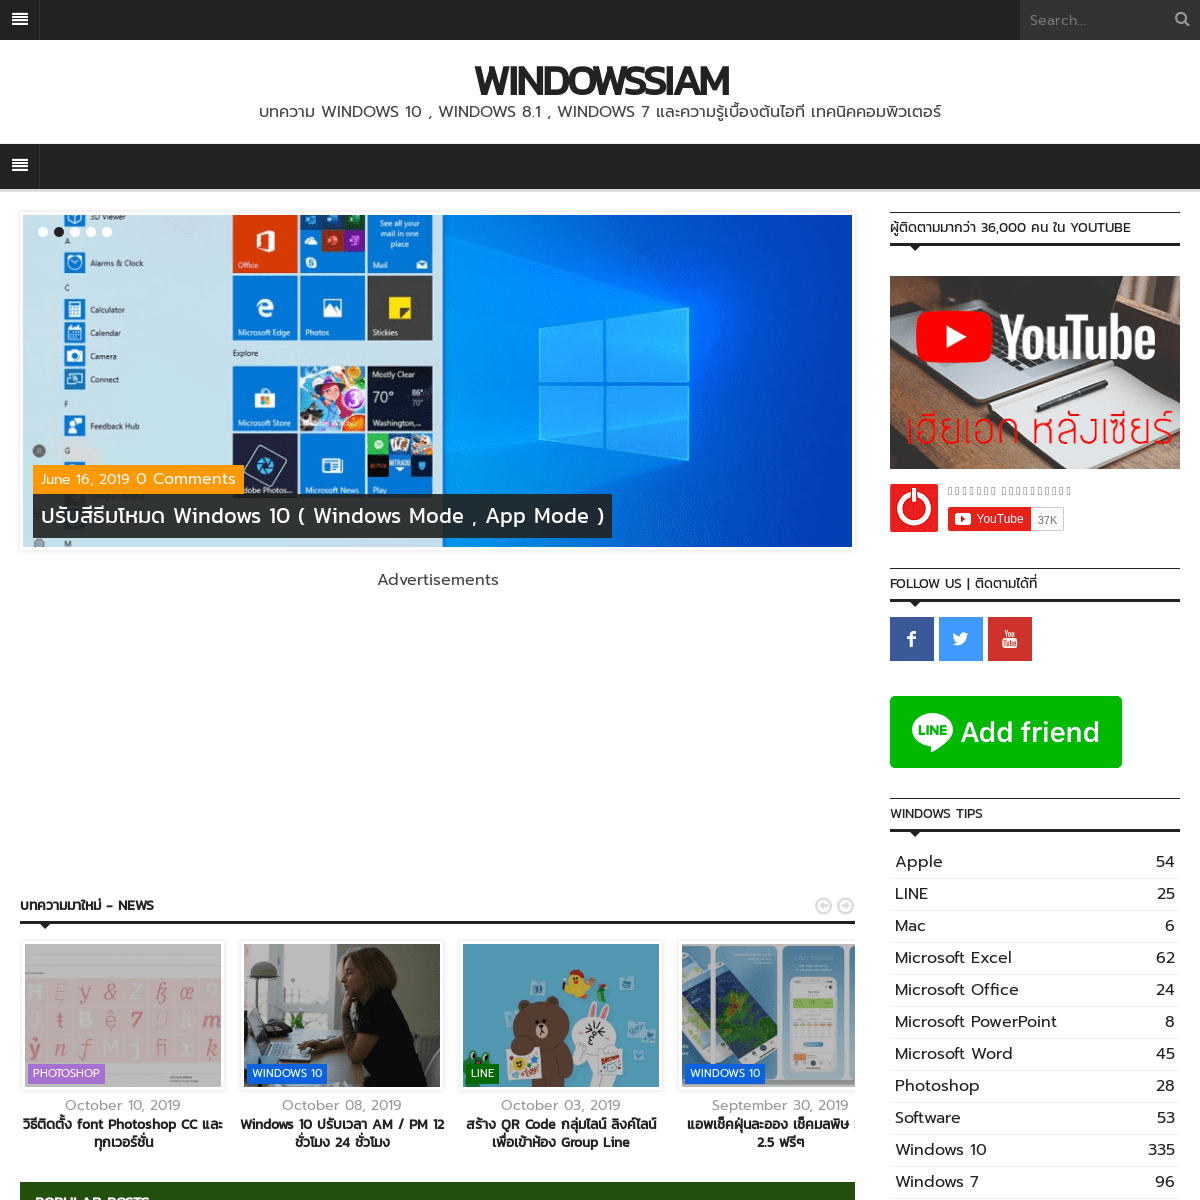 A complete backup of windowssiam.com